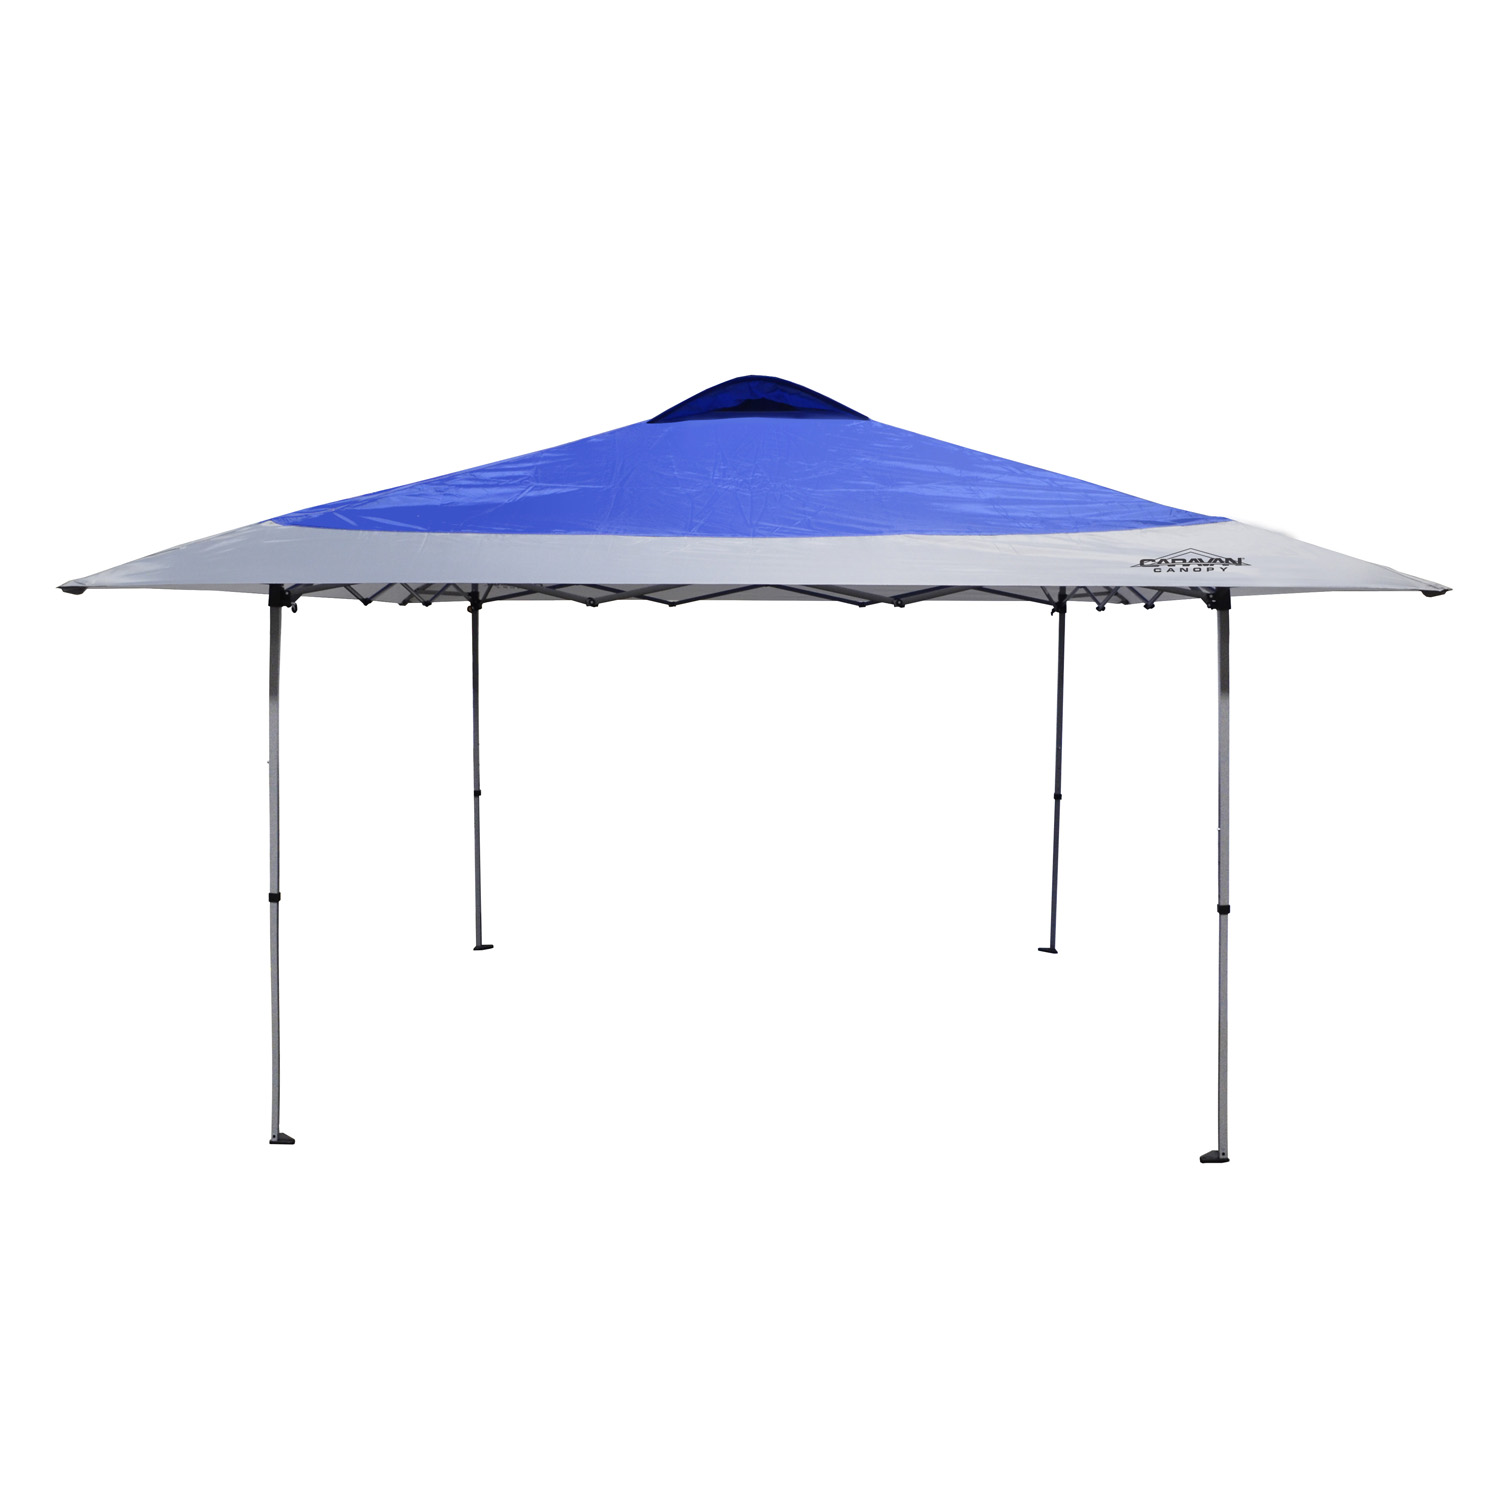 Caravan Canopy 8' x 8' Evo Shade Instant Canopy Blue Top/White Frame 